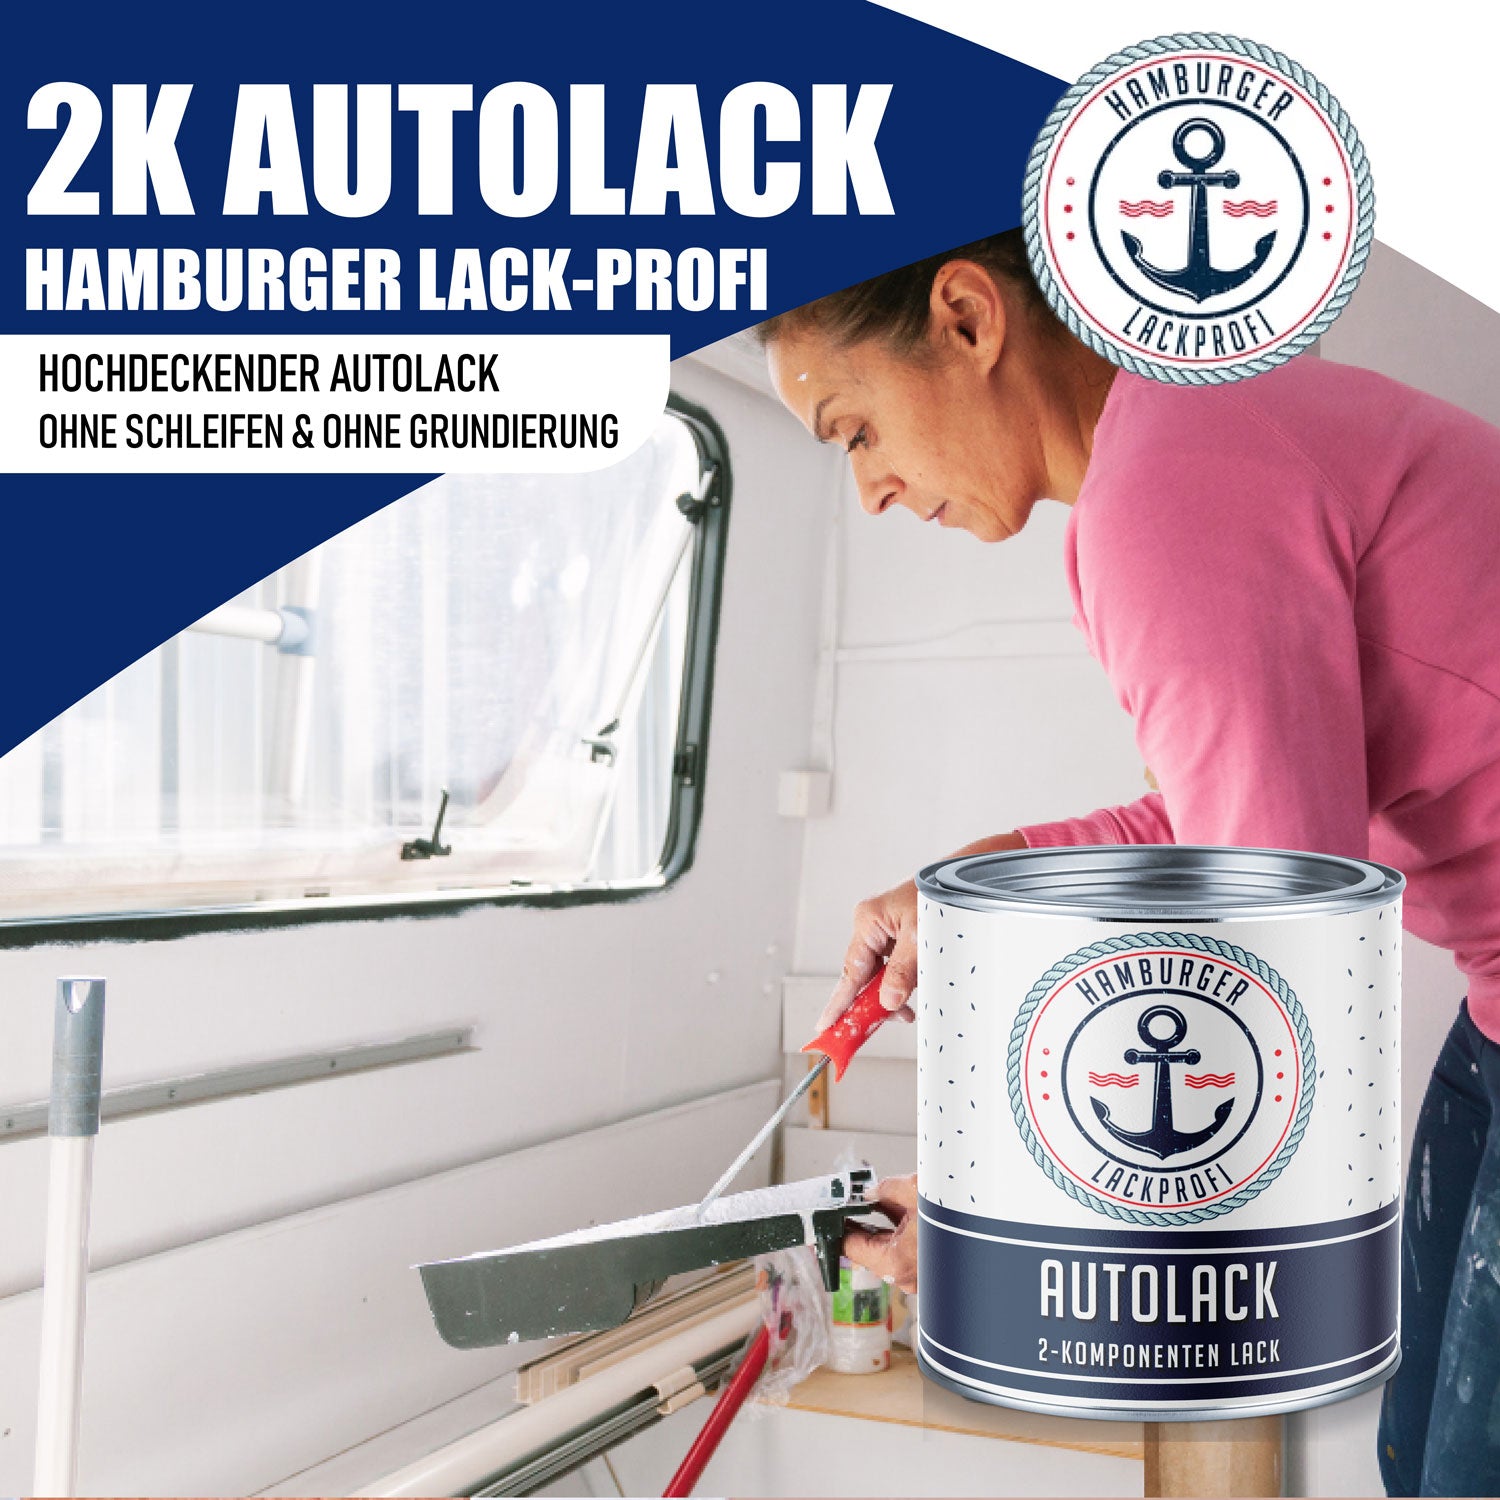 Hamburger Lack-Profi 2K Autolack in Fenstergrau RAL 7040 mit Lackierset (X300) & Verdünnung (1 L) - 30% Sparangebot